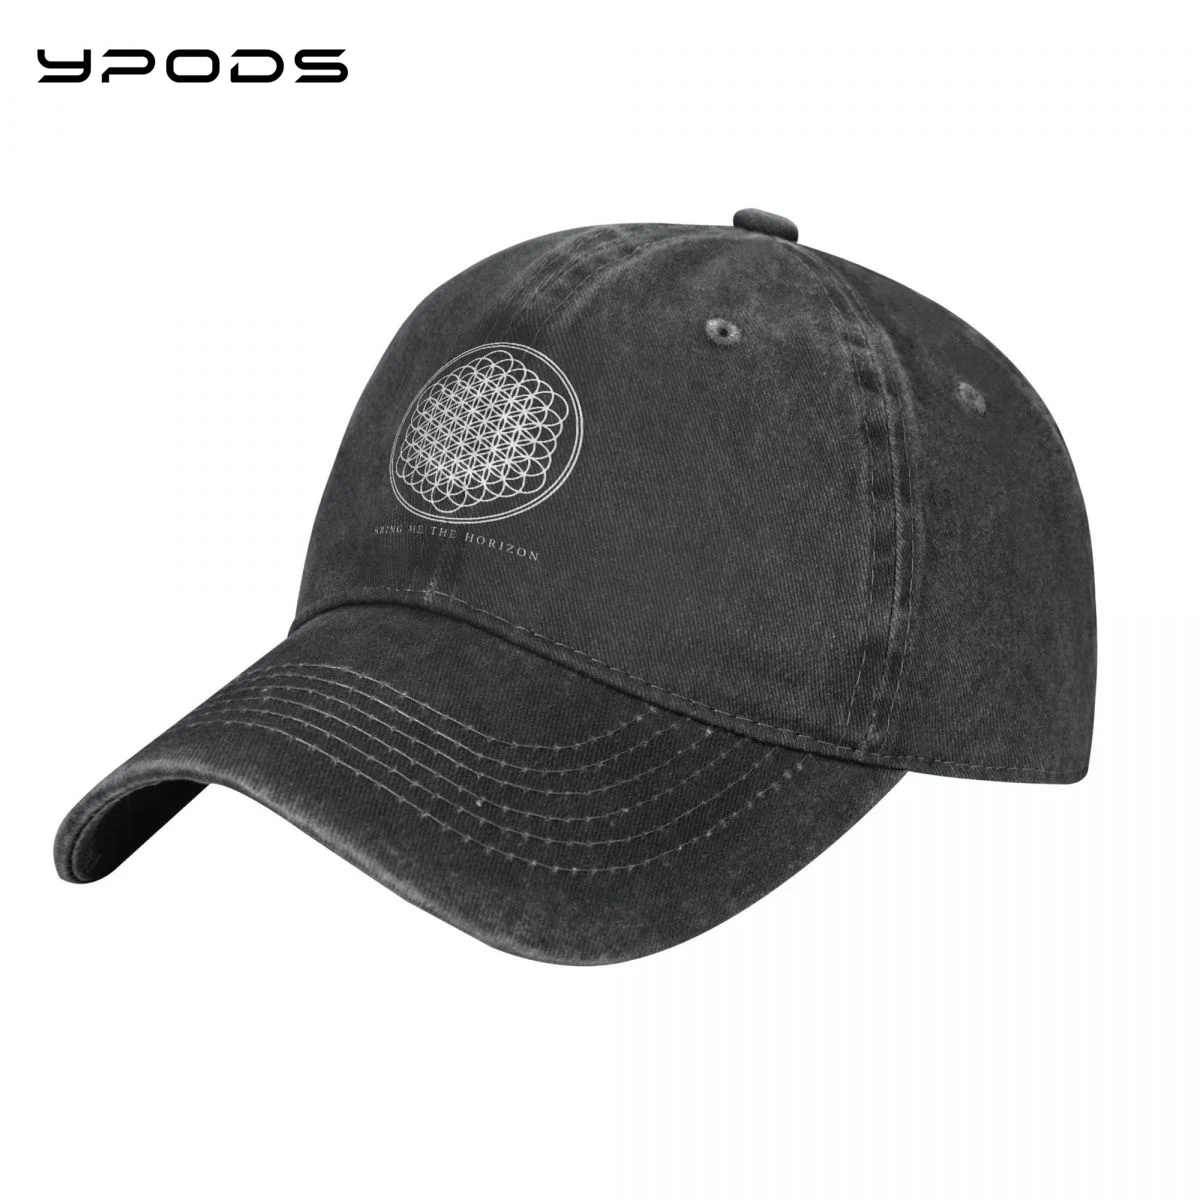 

Bring Me The Horizon Sempiternal Tour Baseball Caps for Men Women Vintage Washed Cotton Dad Hats Print Snapback Cap Hat